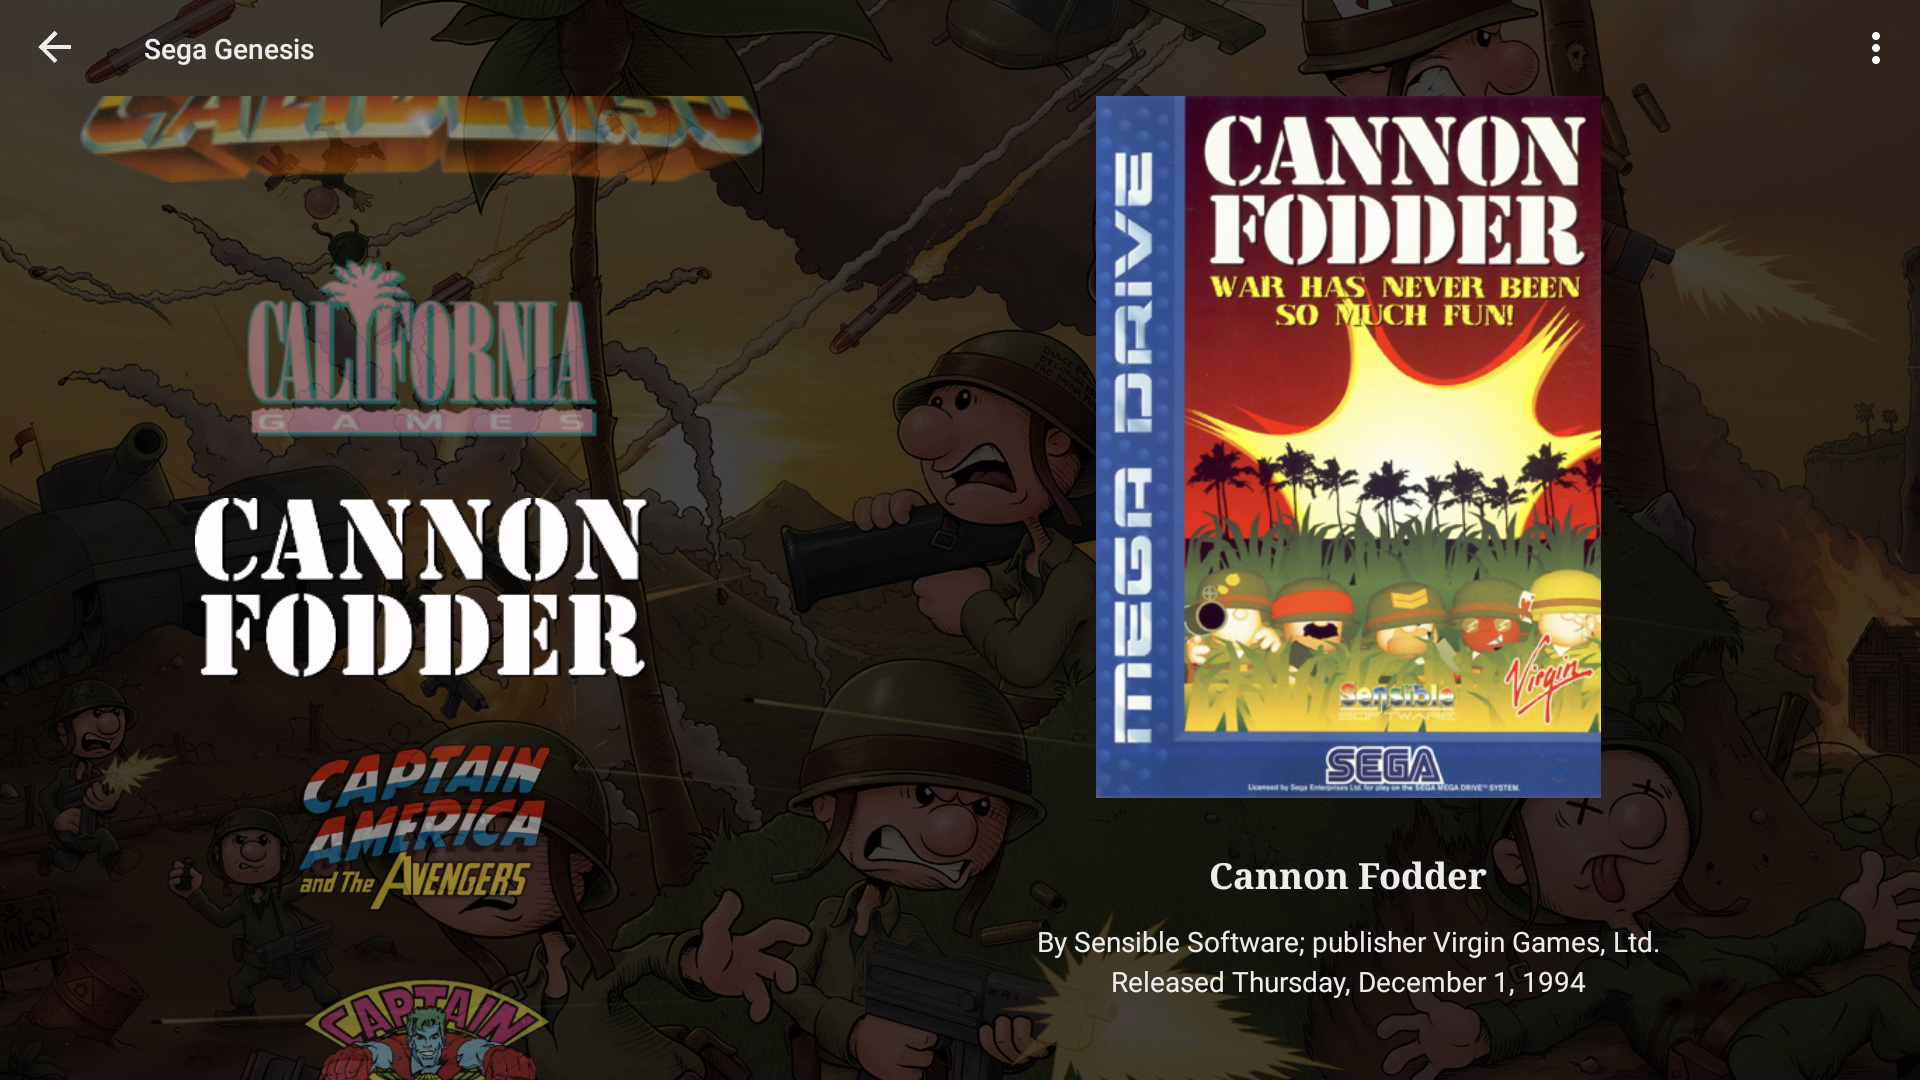 LaunchBox for Android Screenshot - Sega Genesis Wheel - Cannon Fodder